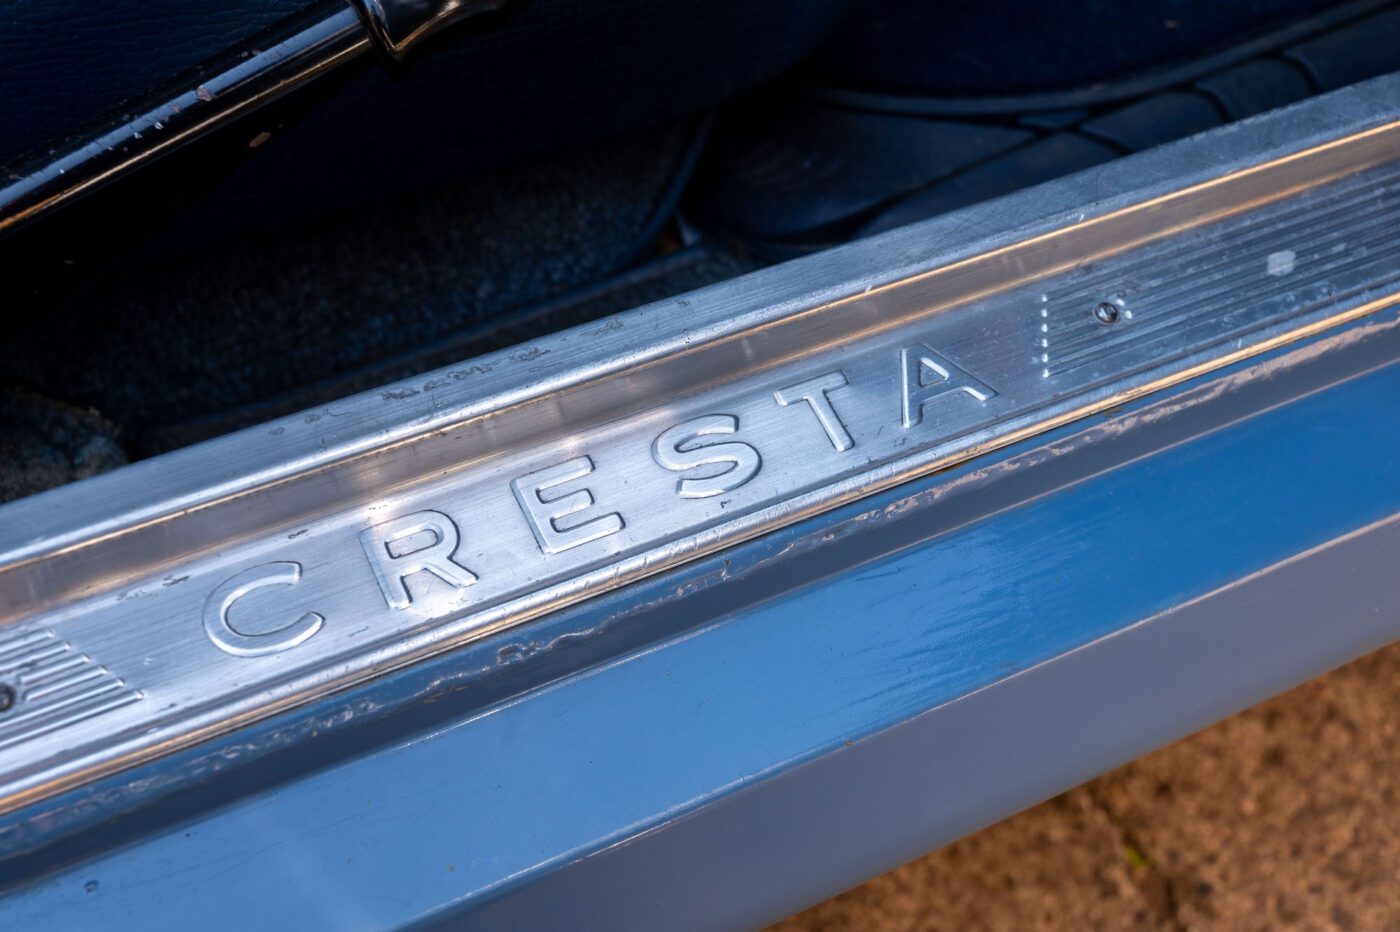 Vauxhall Cresta PB sill plate